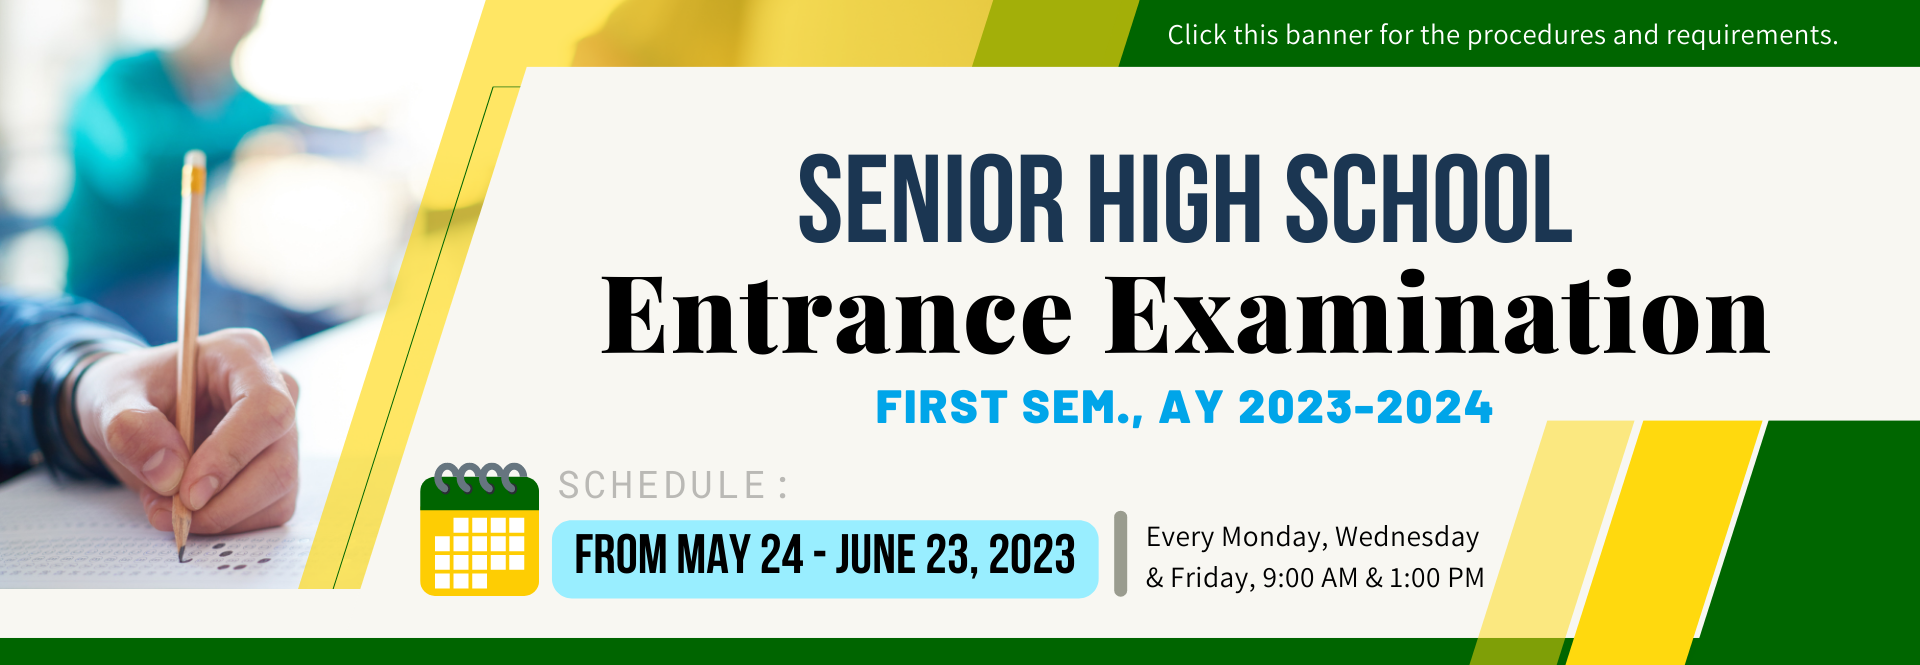 SHS Entrance Exam Schedule banner